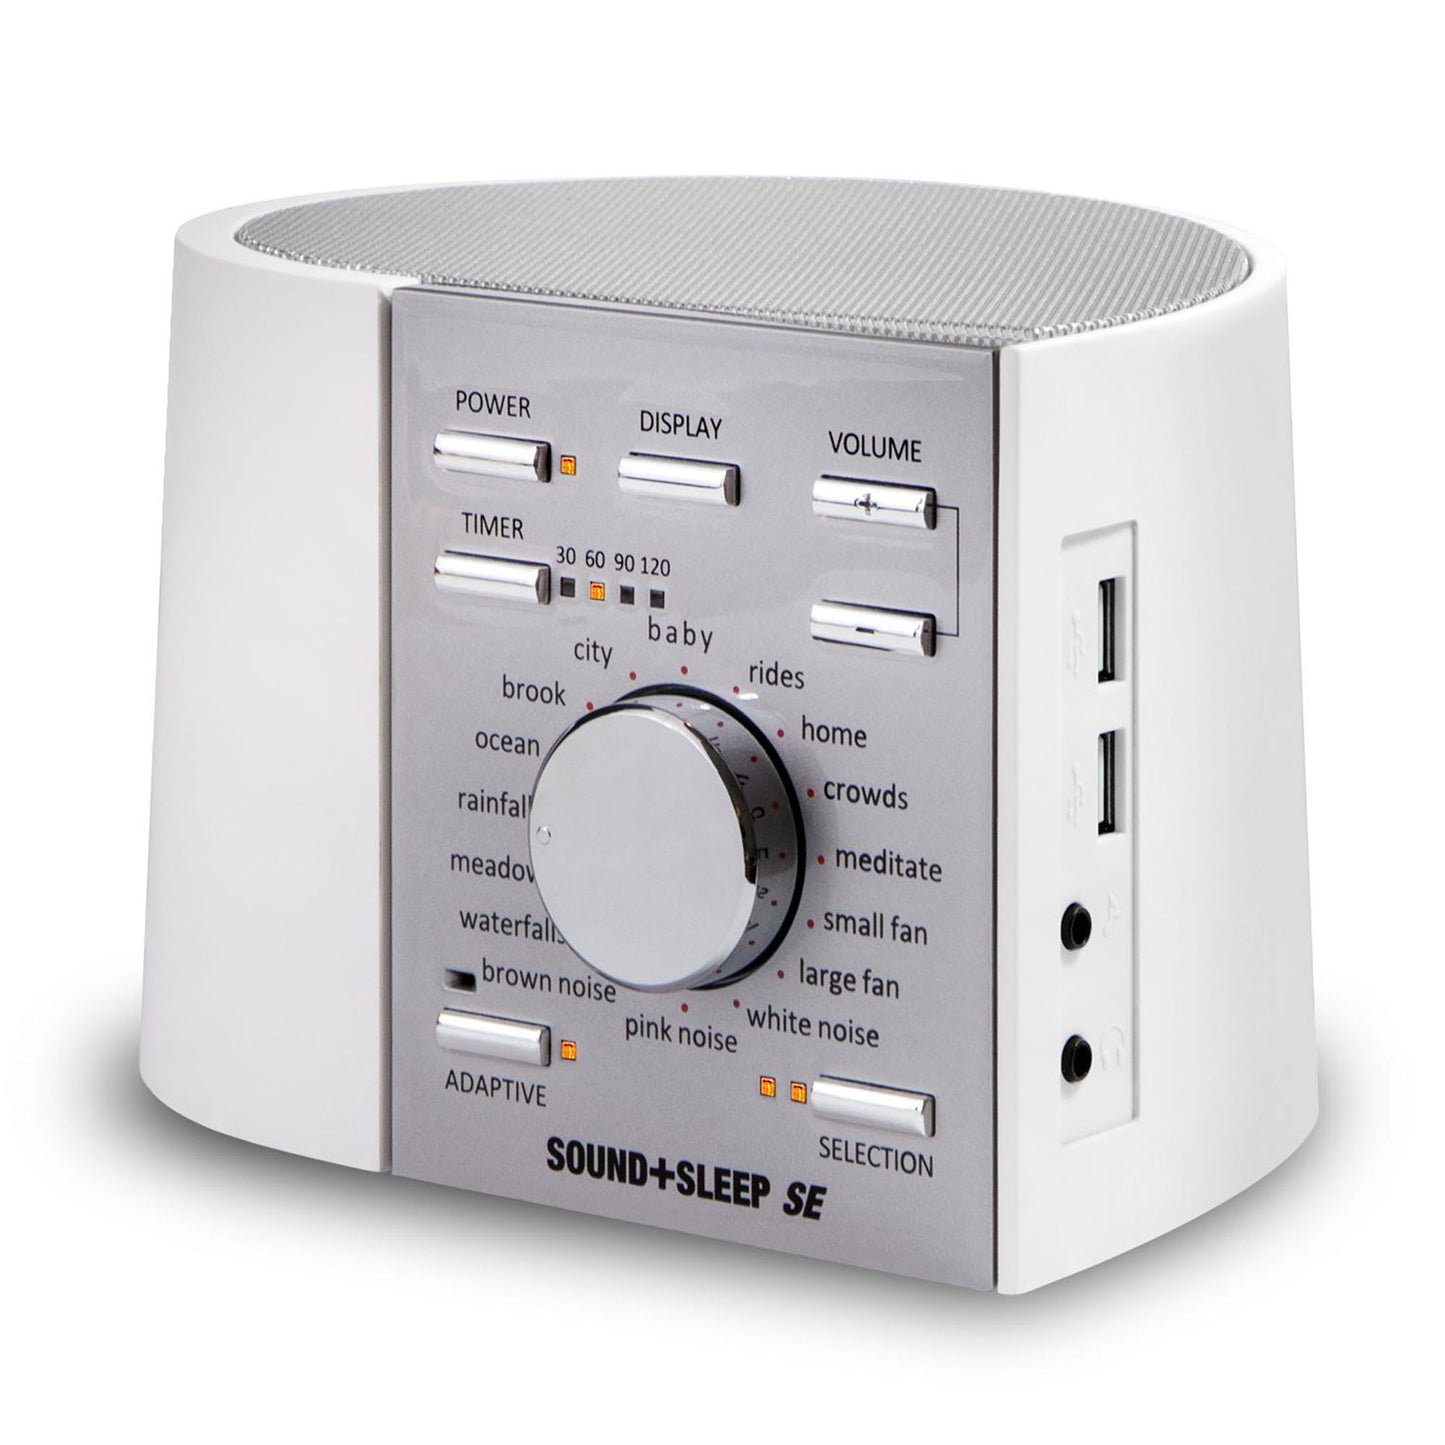 Sound+Sleep SE White/Silver Adaptive Sound Sleep Therapy System - 15-01437